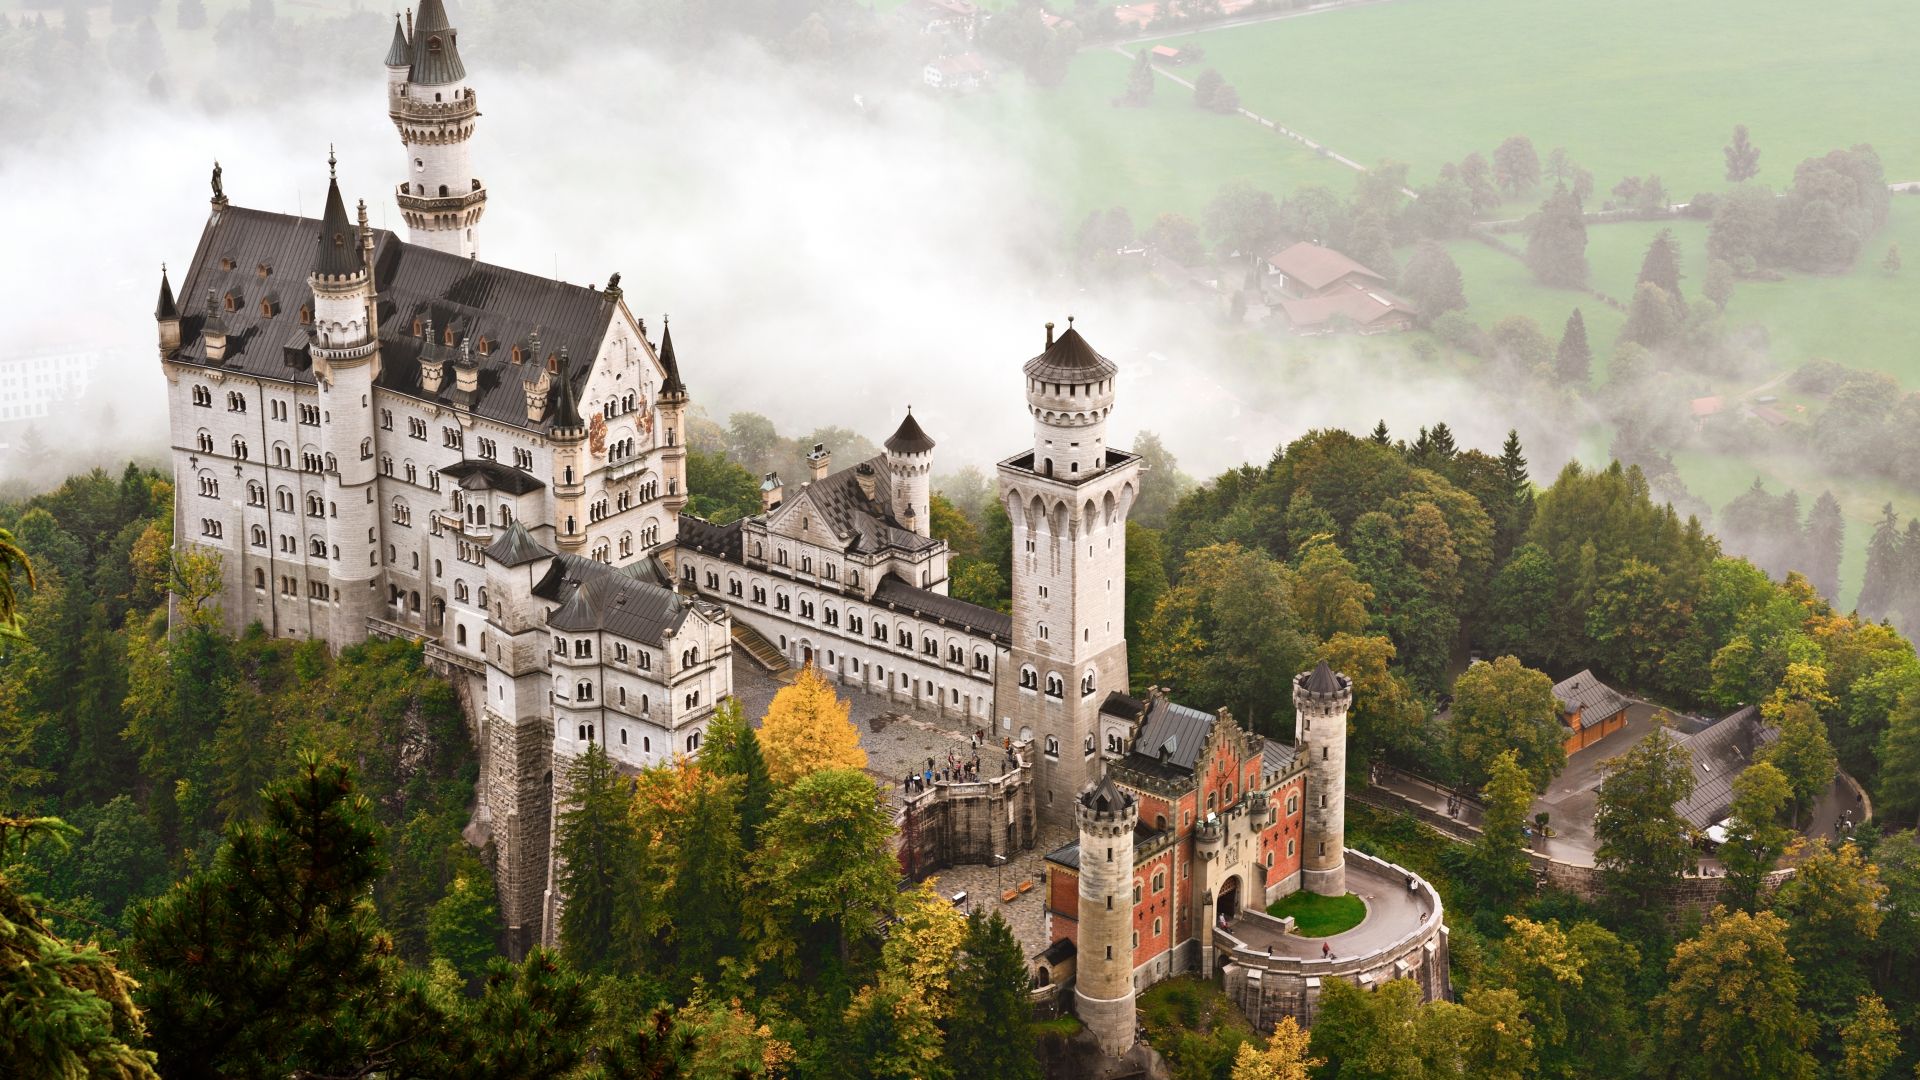 Замок Нойшванштайн, Бавария, Германия, туризм, путешествия, Neuschwanstein castle, Bavaria, Germany, tourism, travel (horizontal)